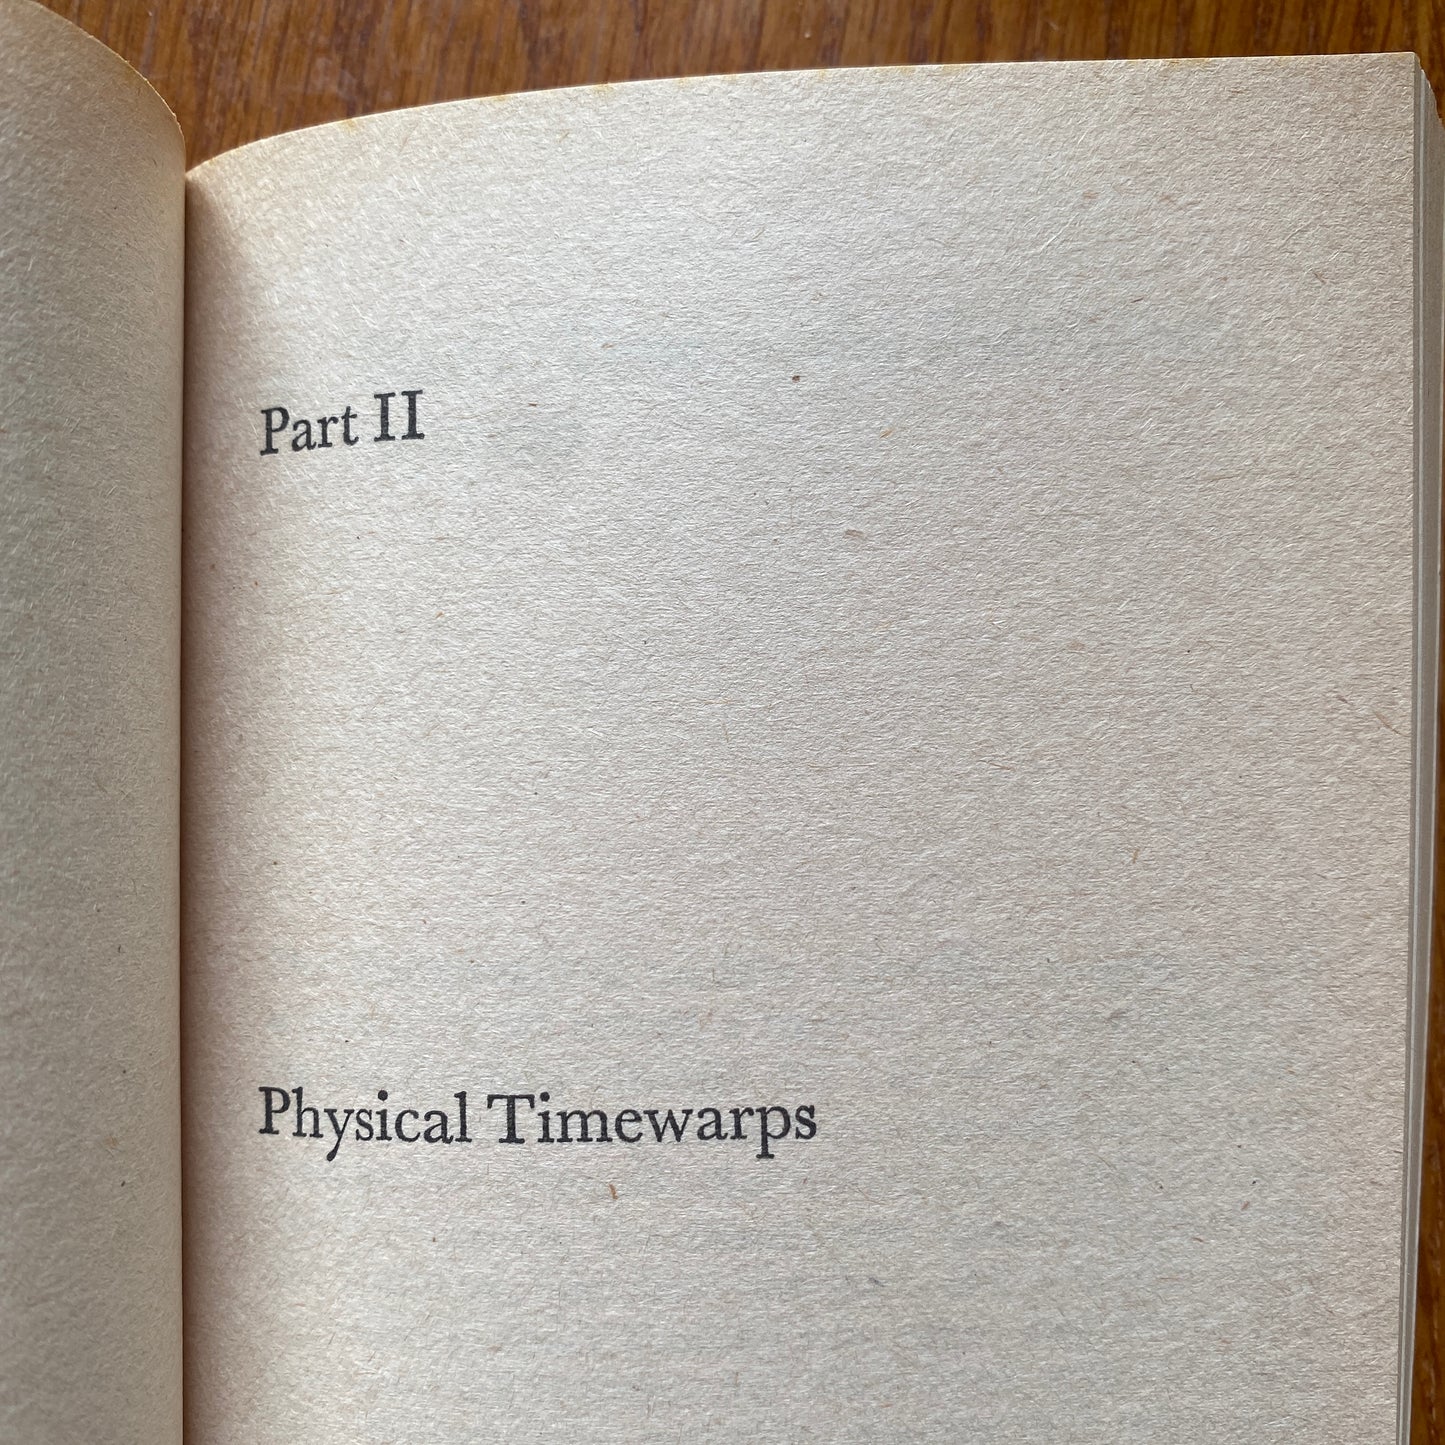 Timewarps - John Gribbin